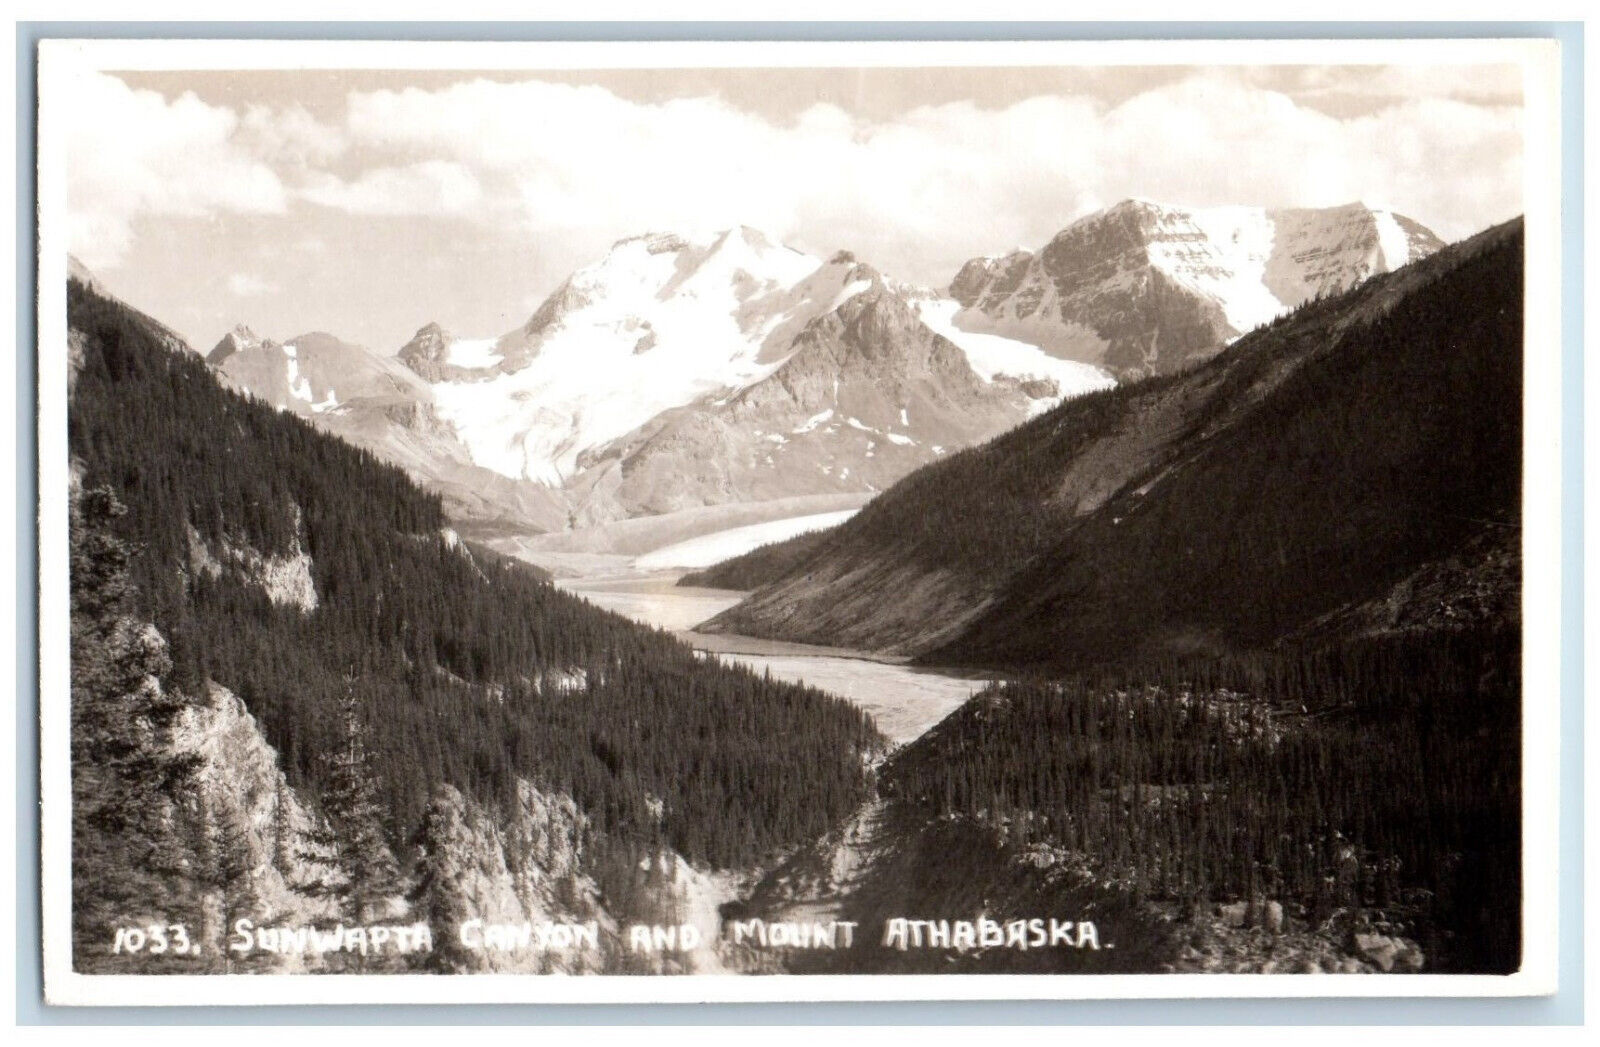 Jasper Canada Postcard Sunwapta Canyon and Mount Athabaska c1930\'s RPPC Photo